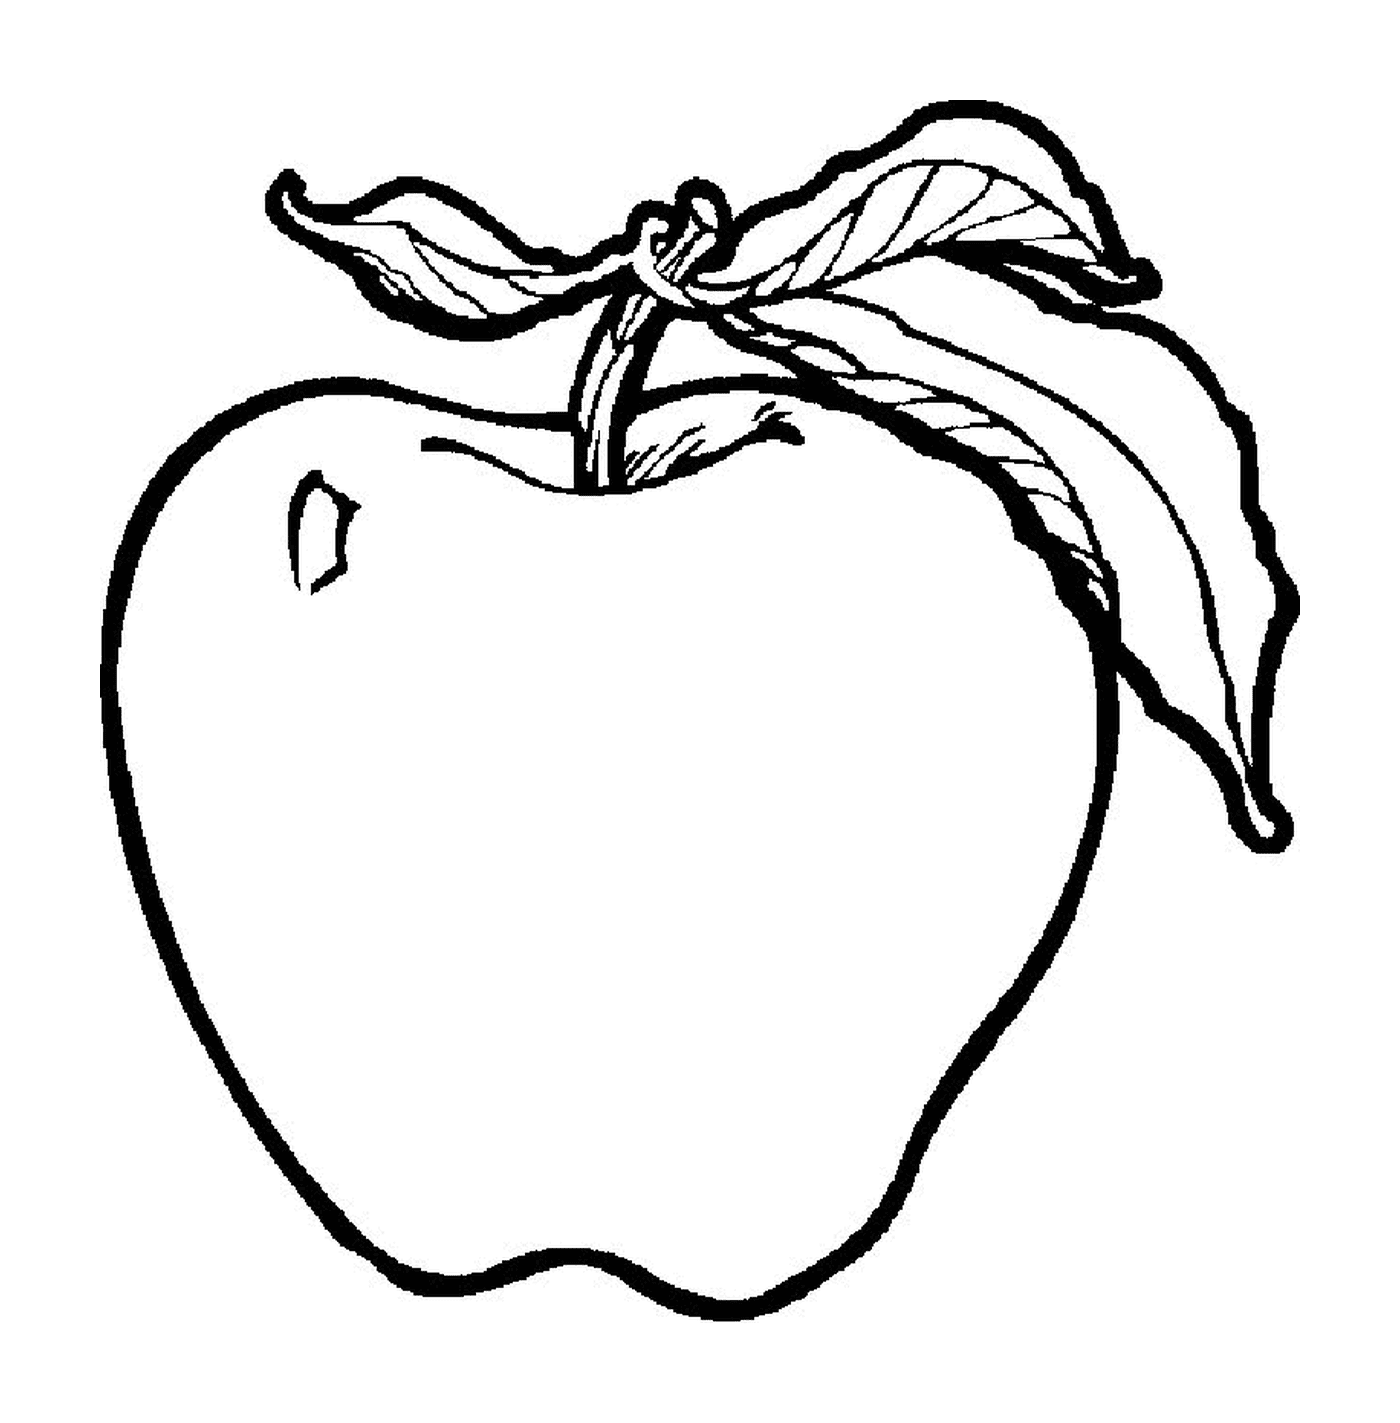  crunchy apple with a leaf 